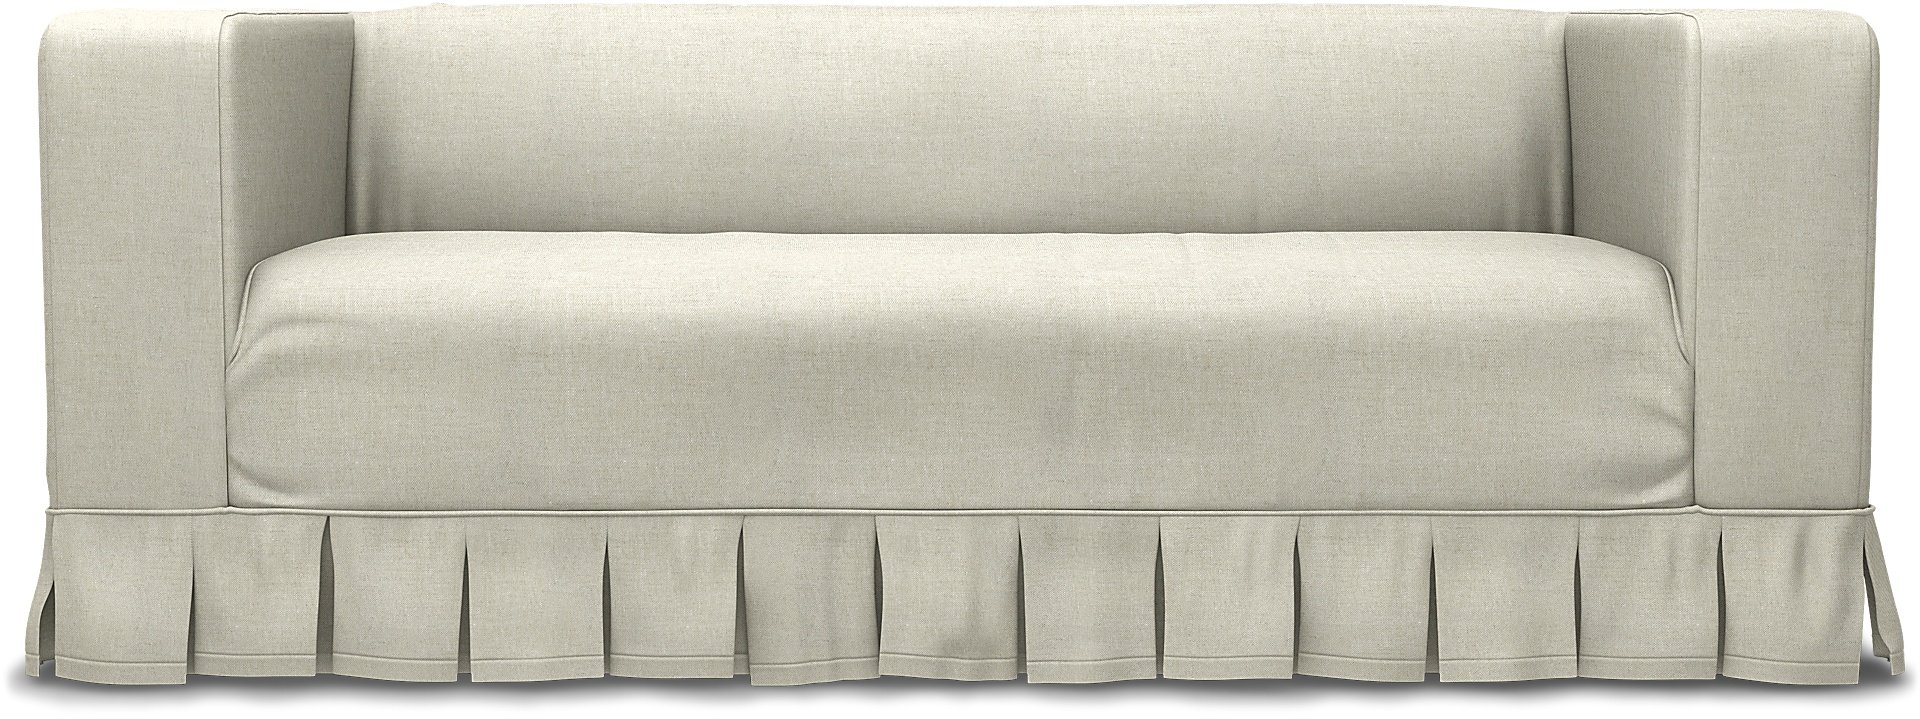 IKEA - Klippan 2 Seater Sofa Cover, Natural, Linen - Bemz